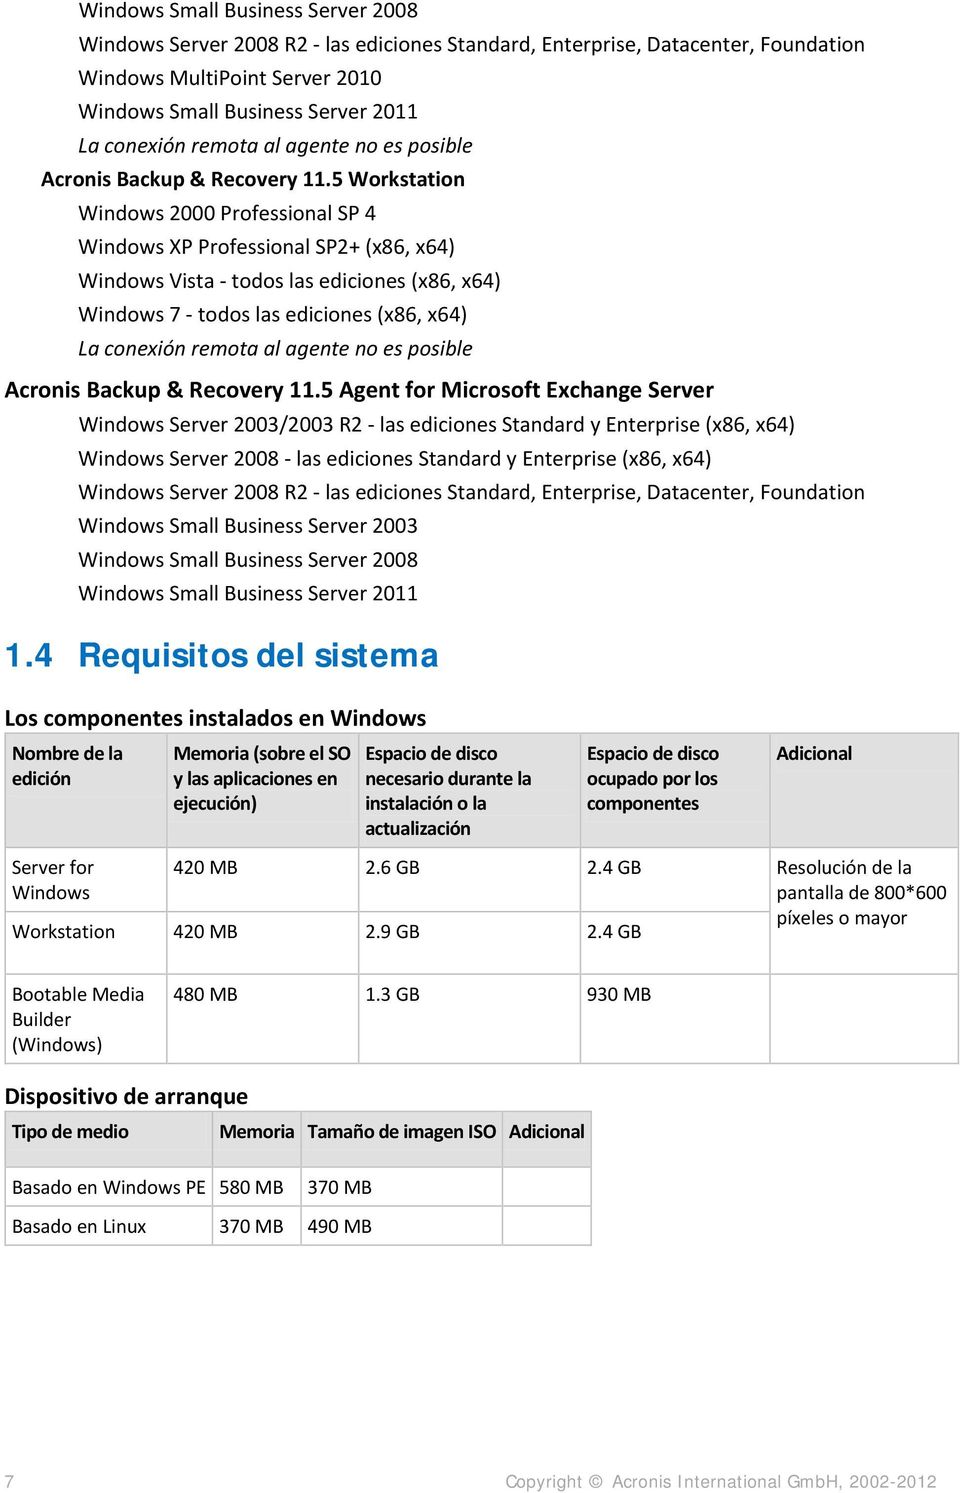 5 Workstation Windows 2000 Professional SP 4 Windows XP Professional SP2+ (x86, x64) Windows Vista - todos las ediciones (x86, x64) Windows 7 - todos las ediciones (x86, x64) La conexión 5 Agent for